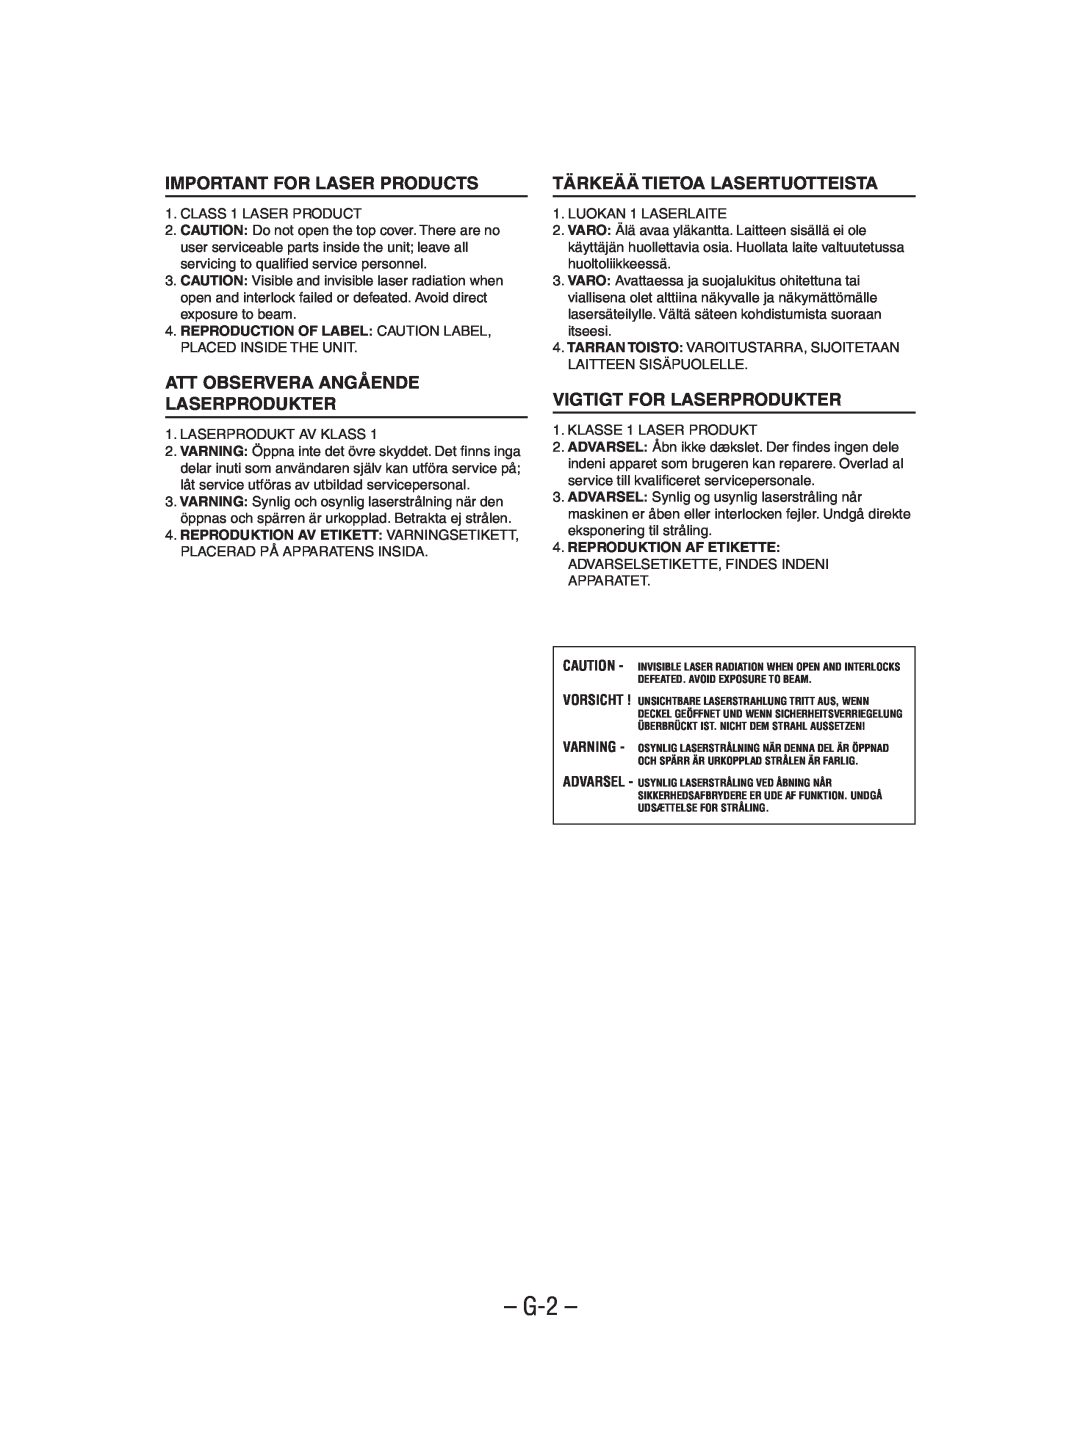 JVC RC-EX25S manual Important For Laser Products, Att Observera Angående Laserprodukter, Tärkeää Tietoa Lasertuotteista 